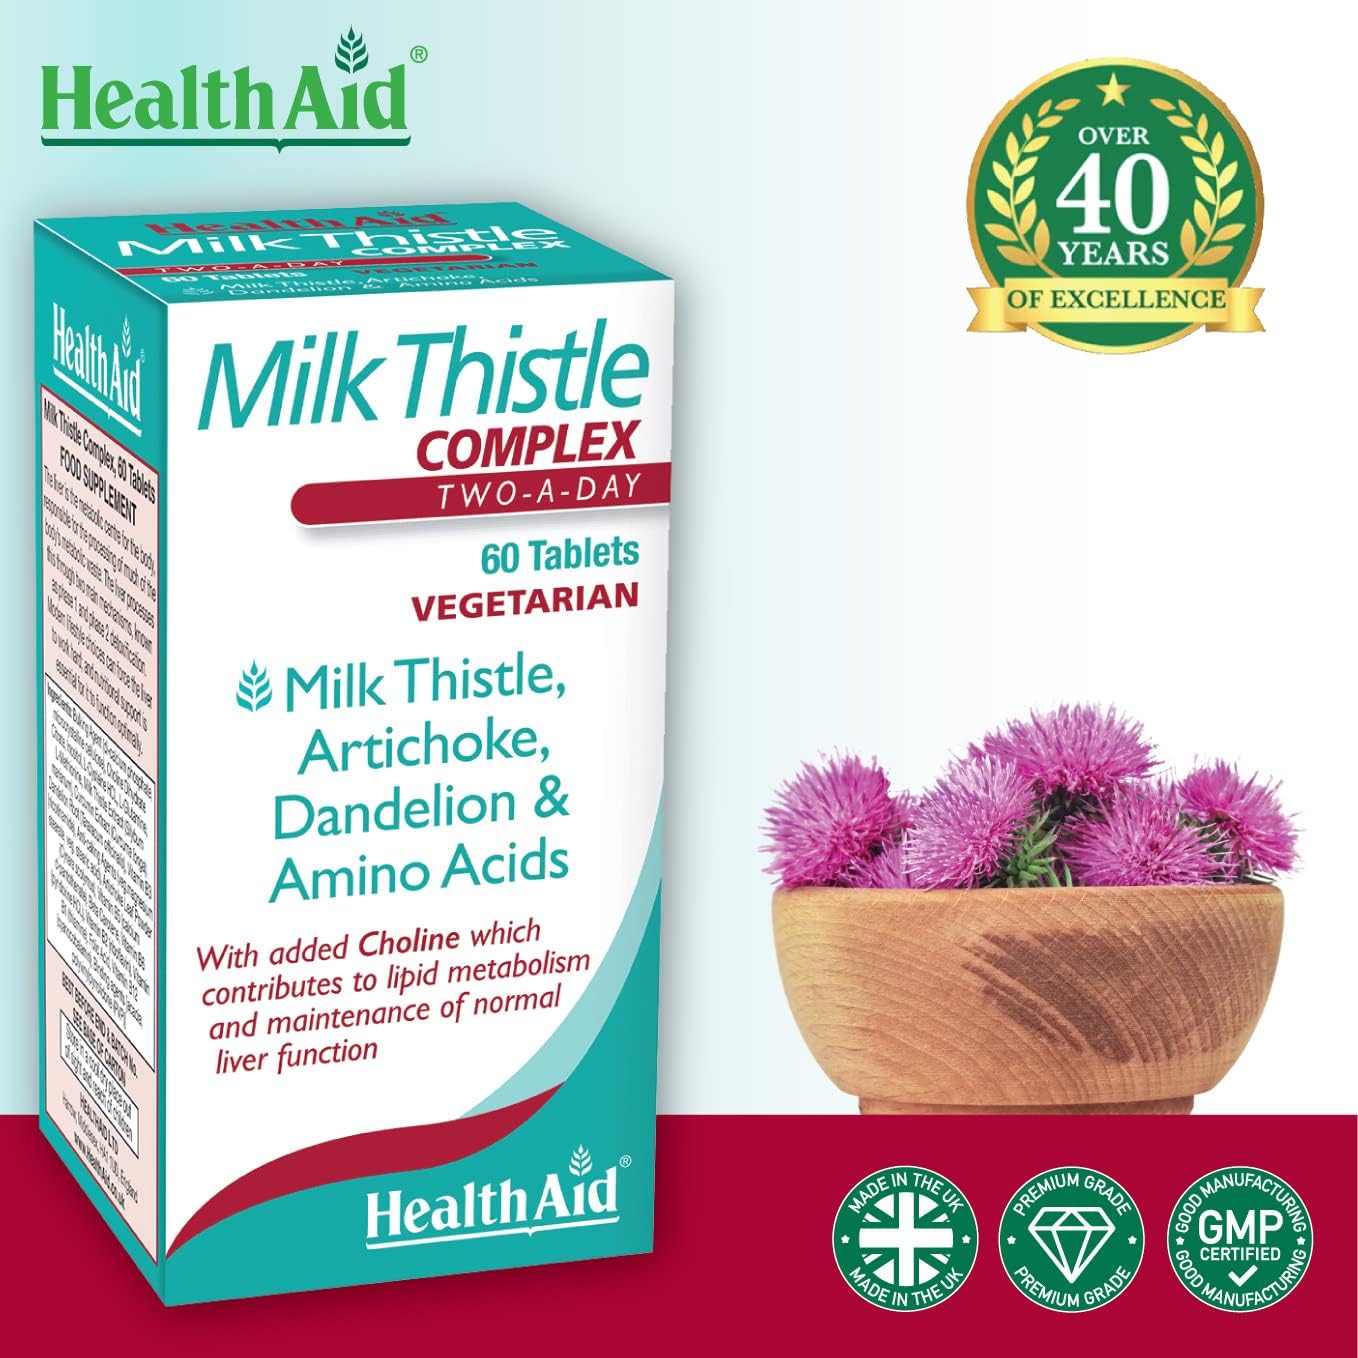 HealthAid Milk Thistle Complex 60 Vegetarian Tablets, Pack of 1

